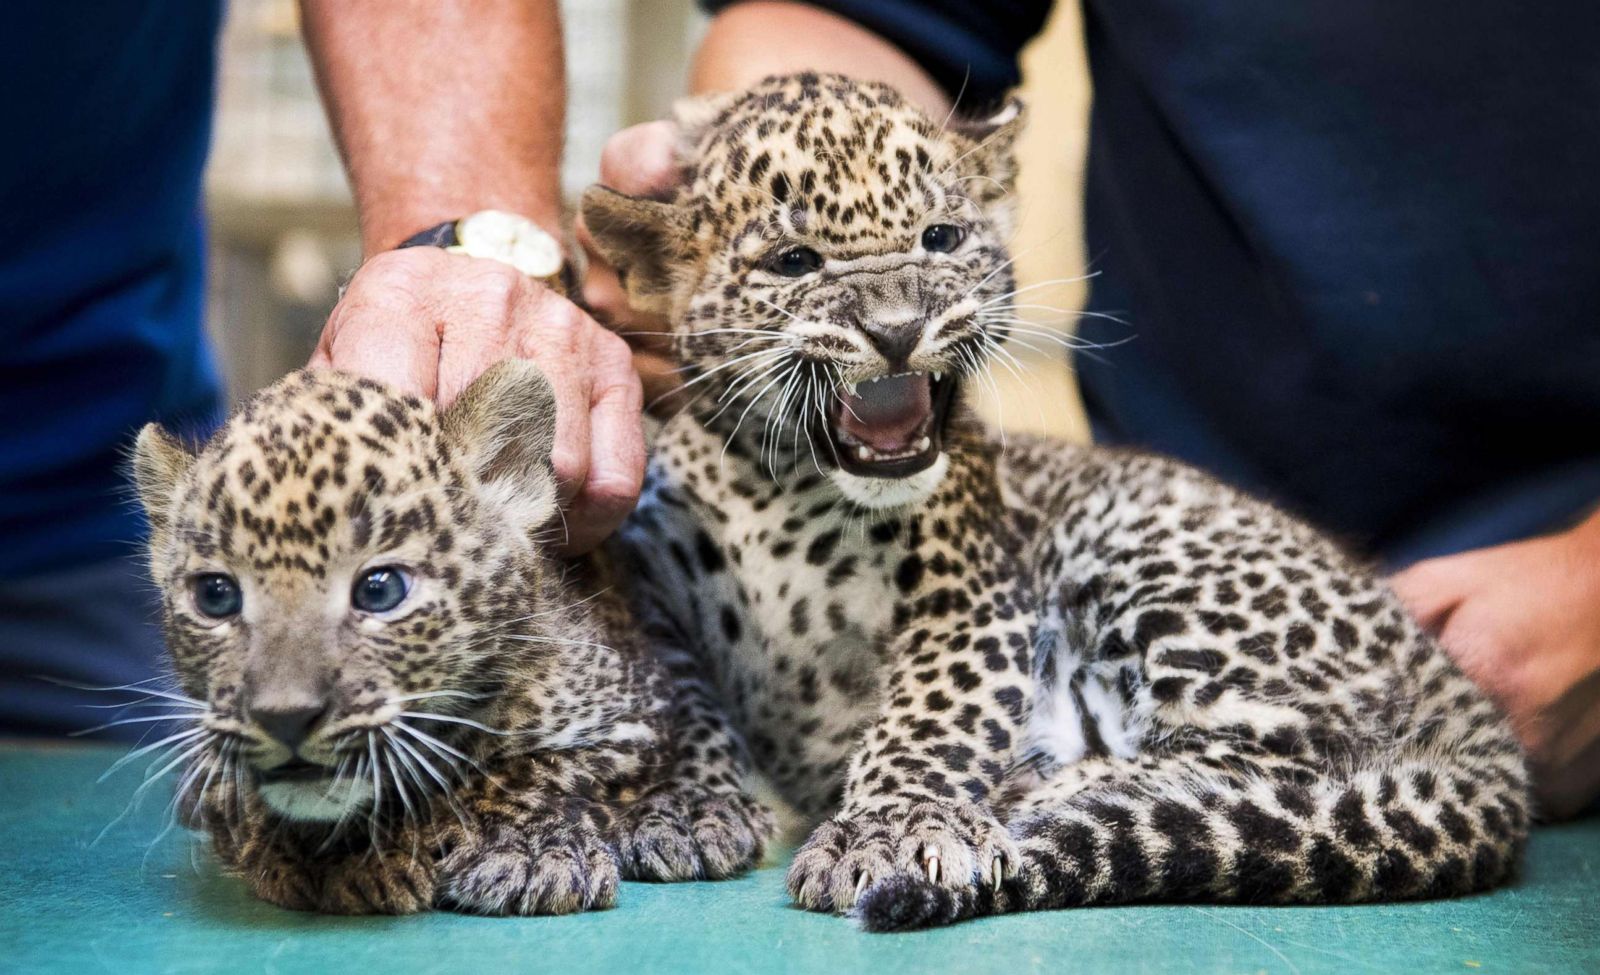 Cutest baby animals from around the world Photos - ABC News